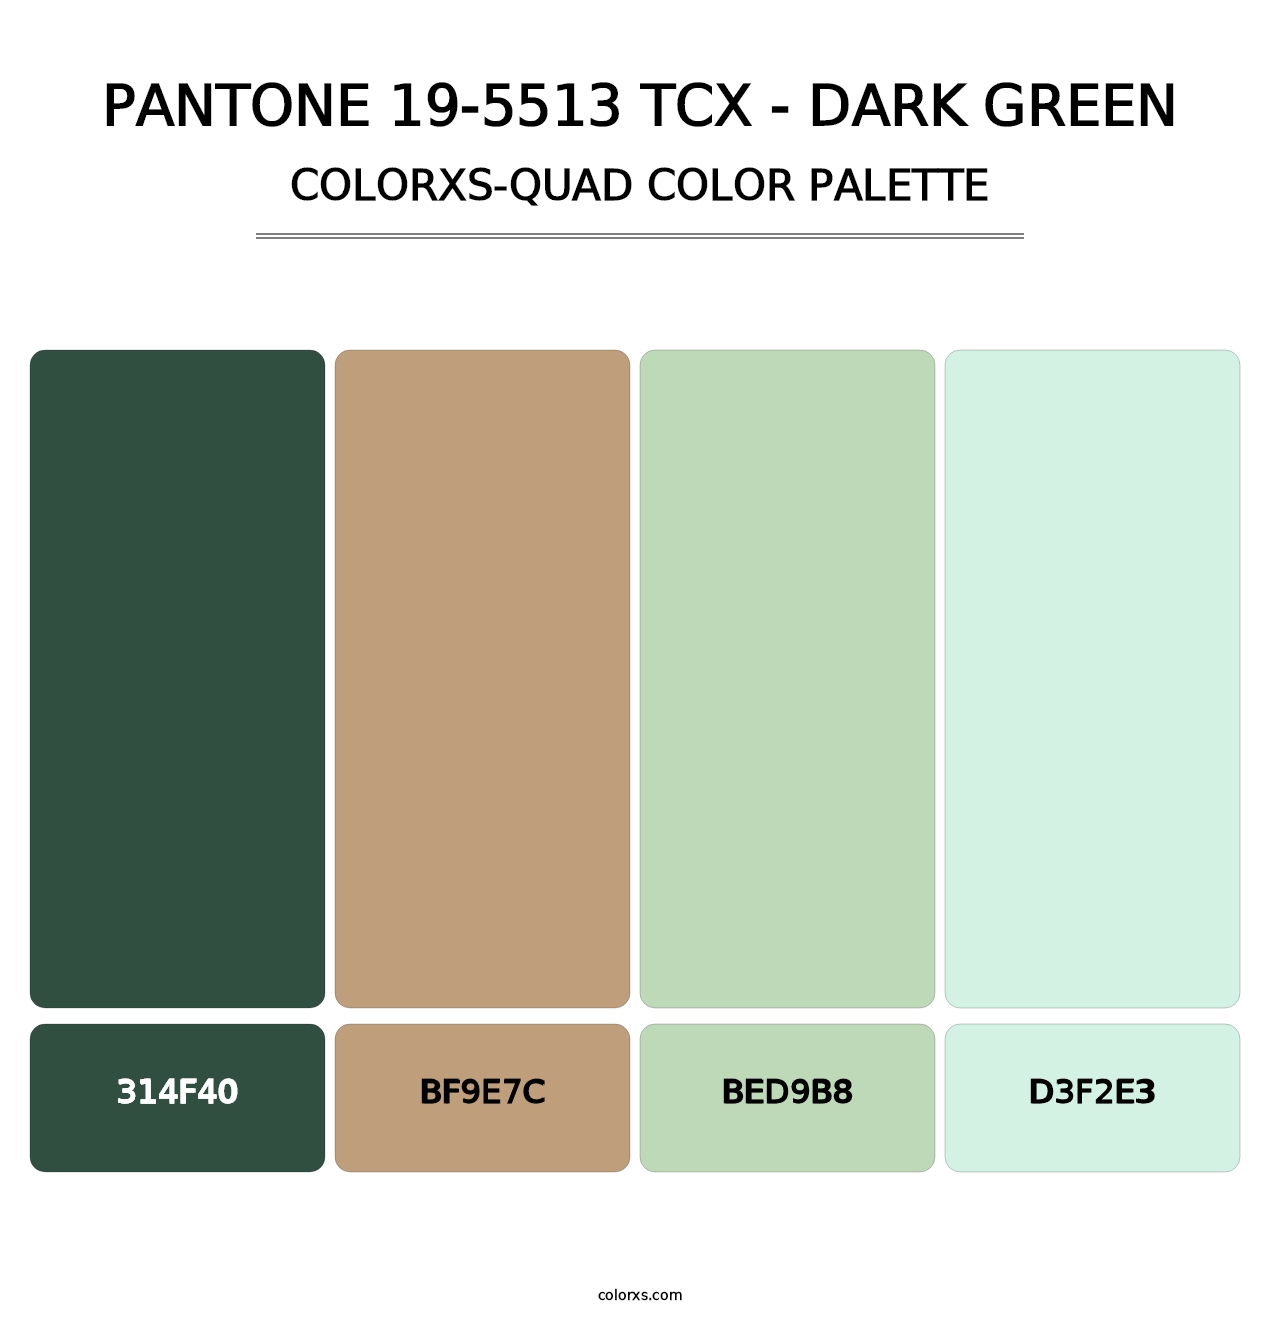 PANTONE 19-5513 TCX - Dark Green - Colorxs Quad Palette